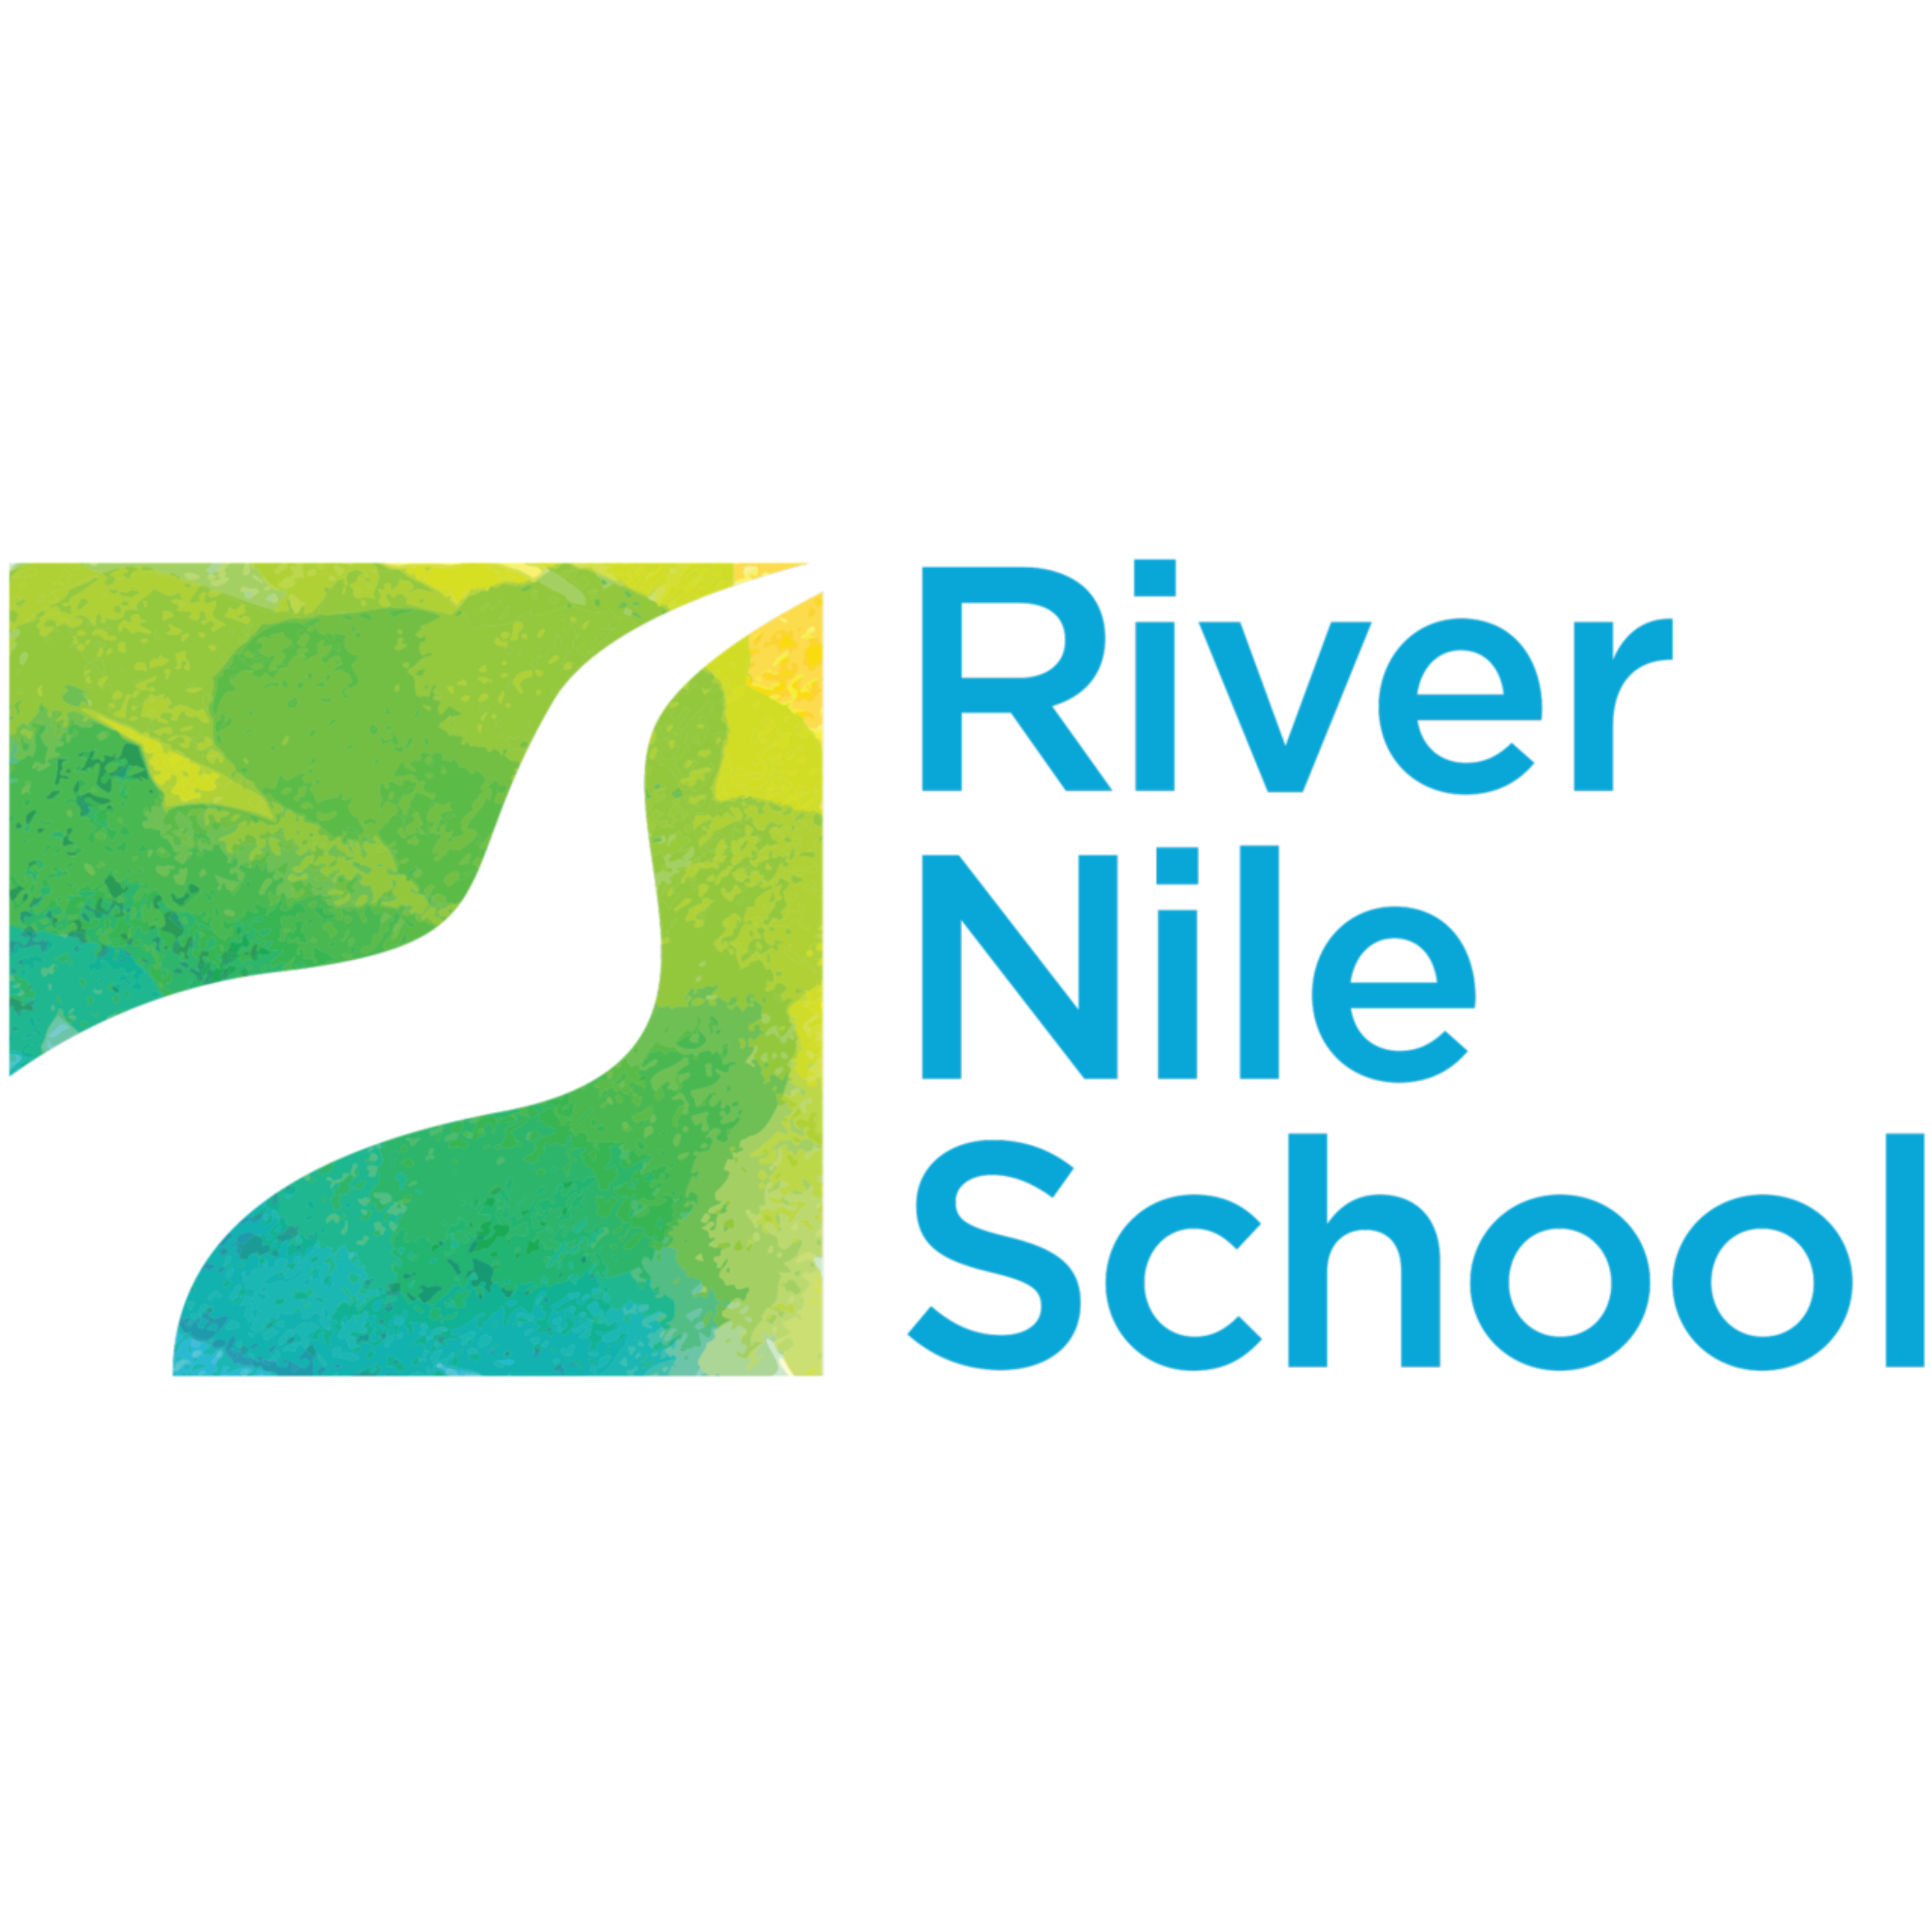 River Nile School : Brand Short Description Type Here.